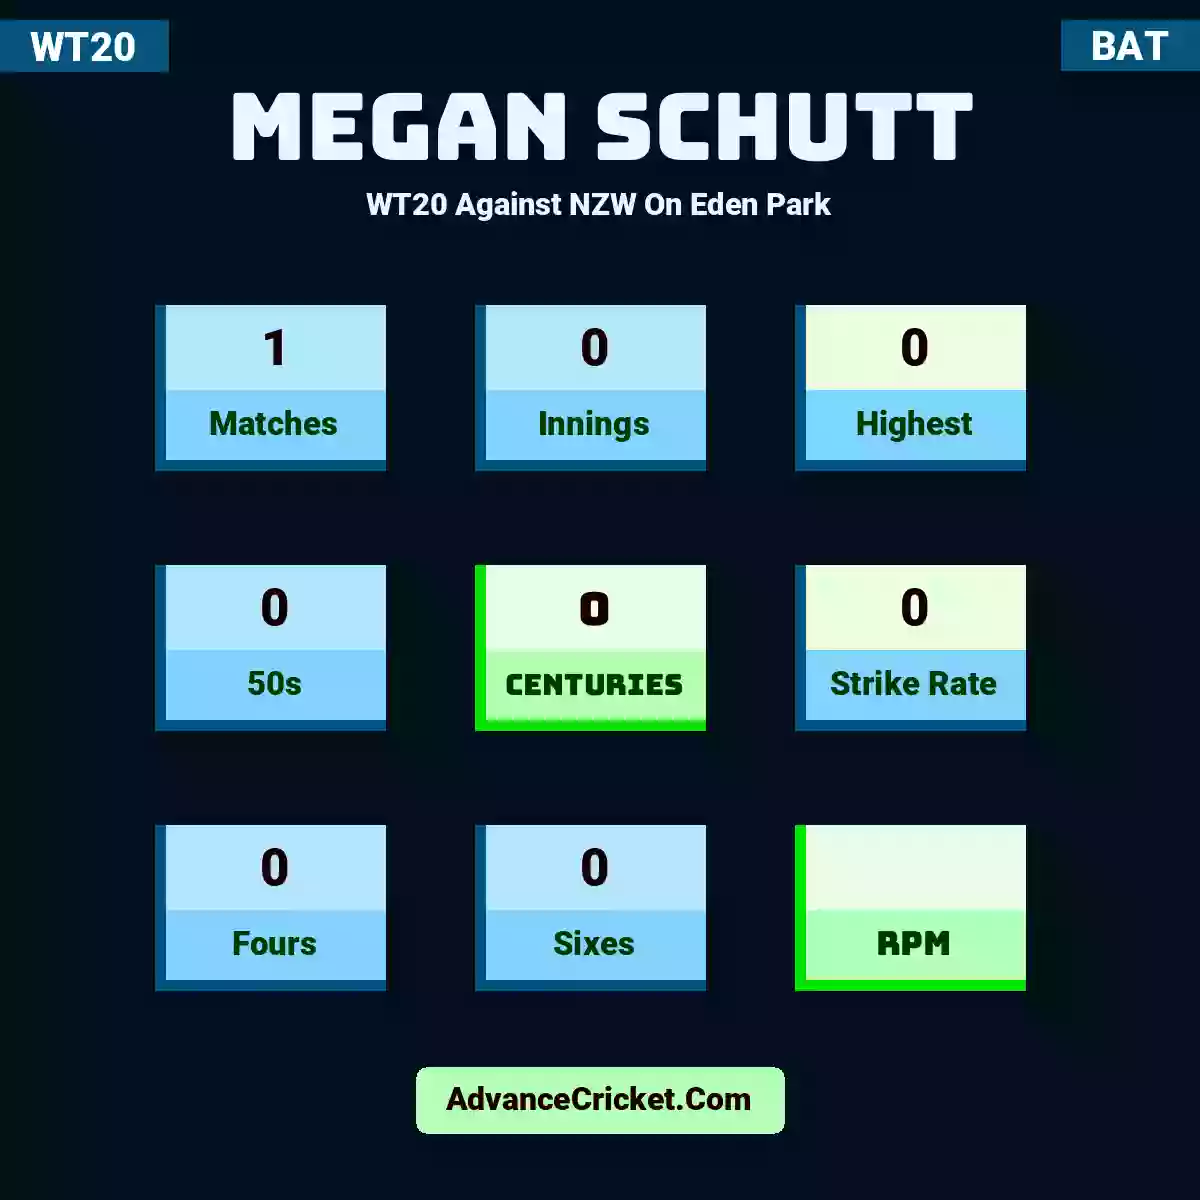 Megan Schutt WT20  Against NZW On Eden Park, Megan Schutt played 1 matches, scored 0 runs as highest, 0 half-centuries, and 0 centuries, with a strike rate of 0. M.Schutt hit 0 fours and 0 sixes.